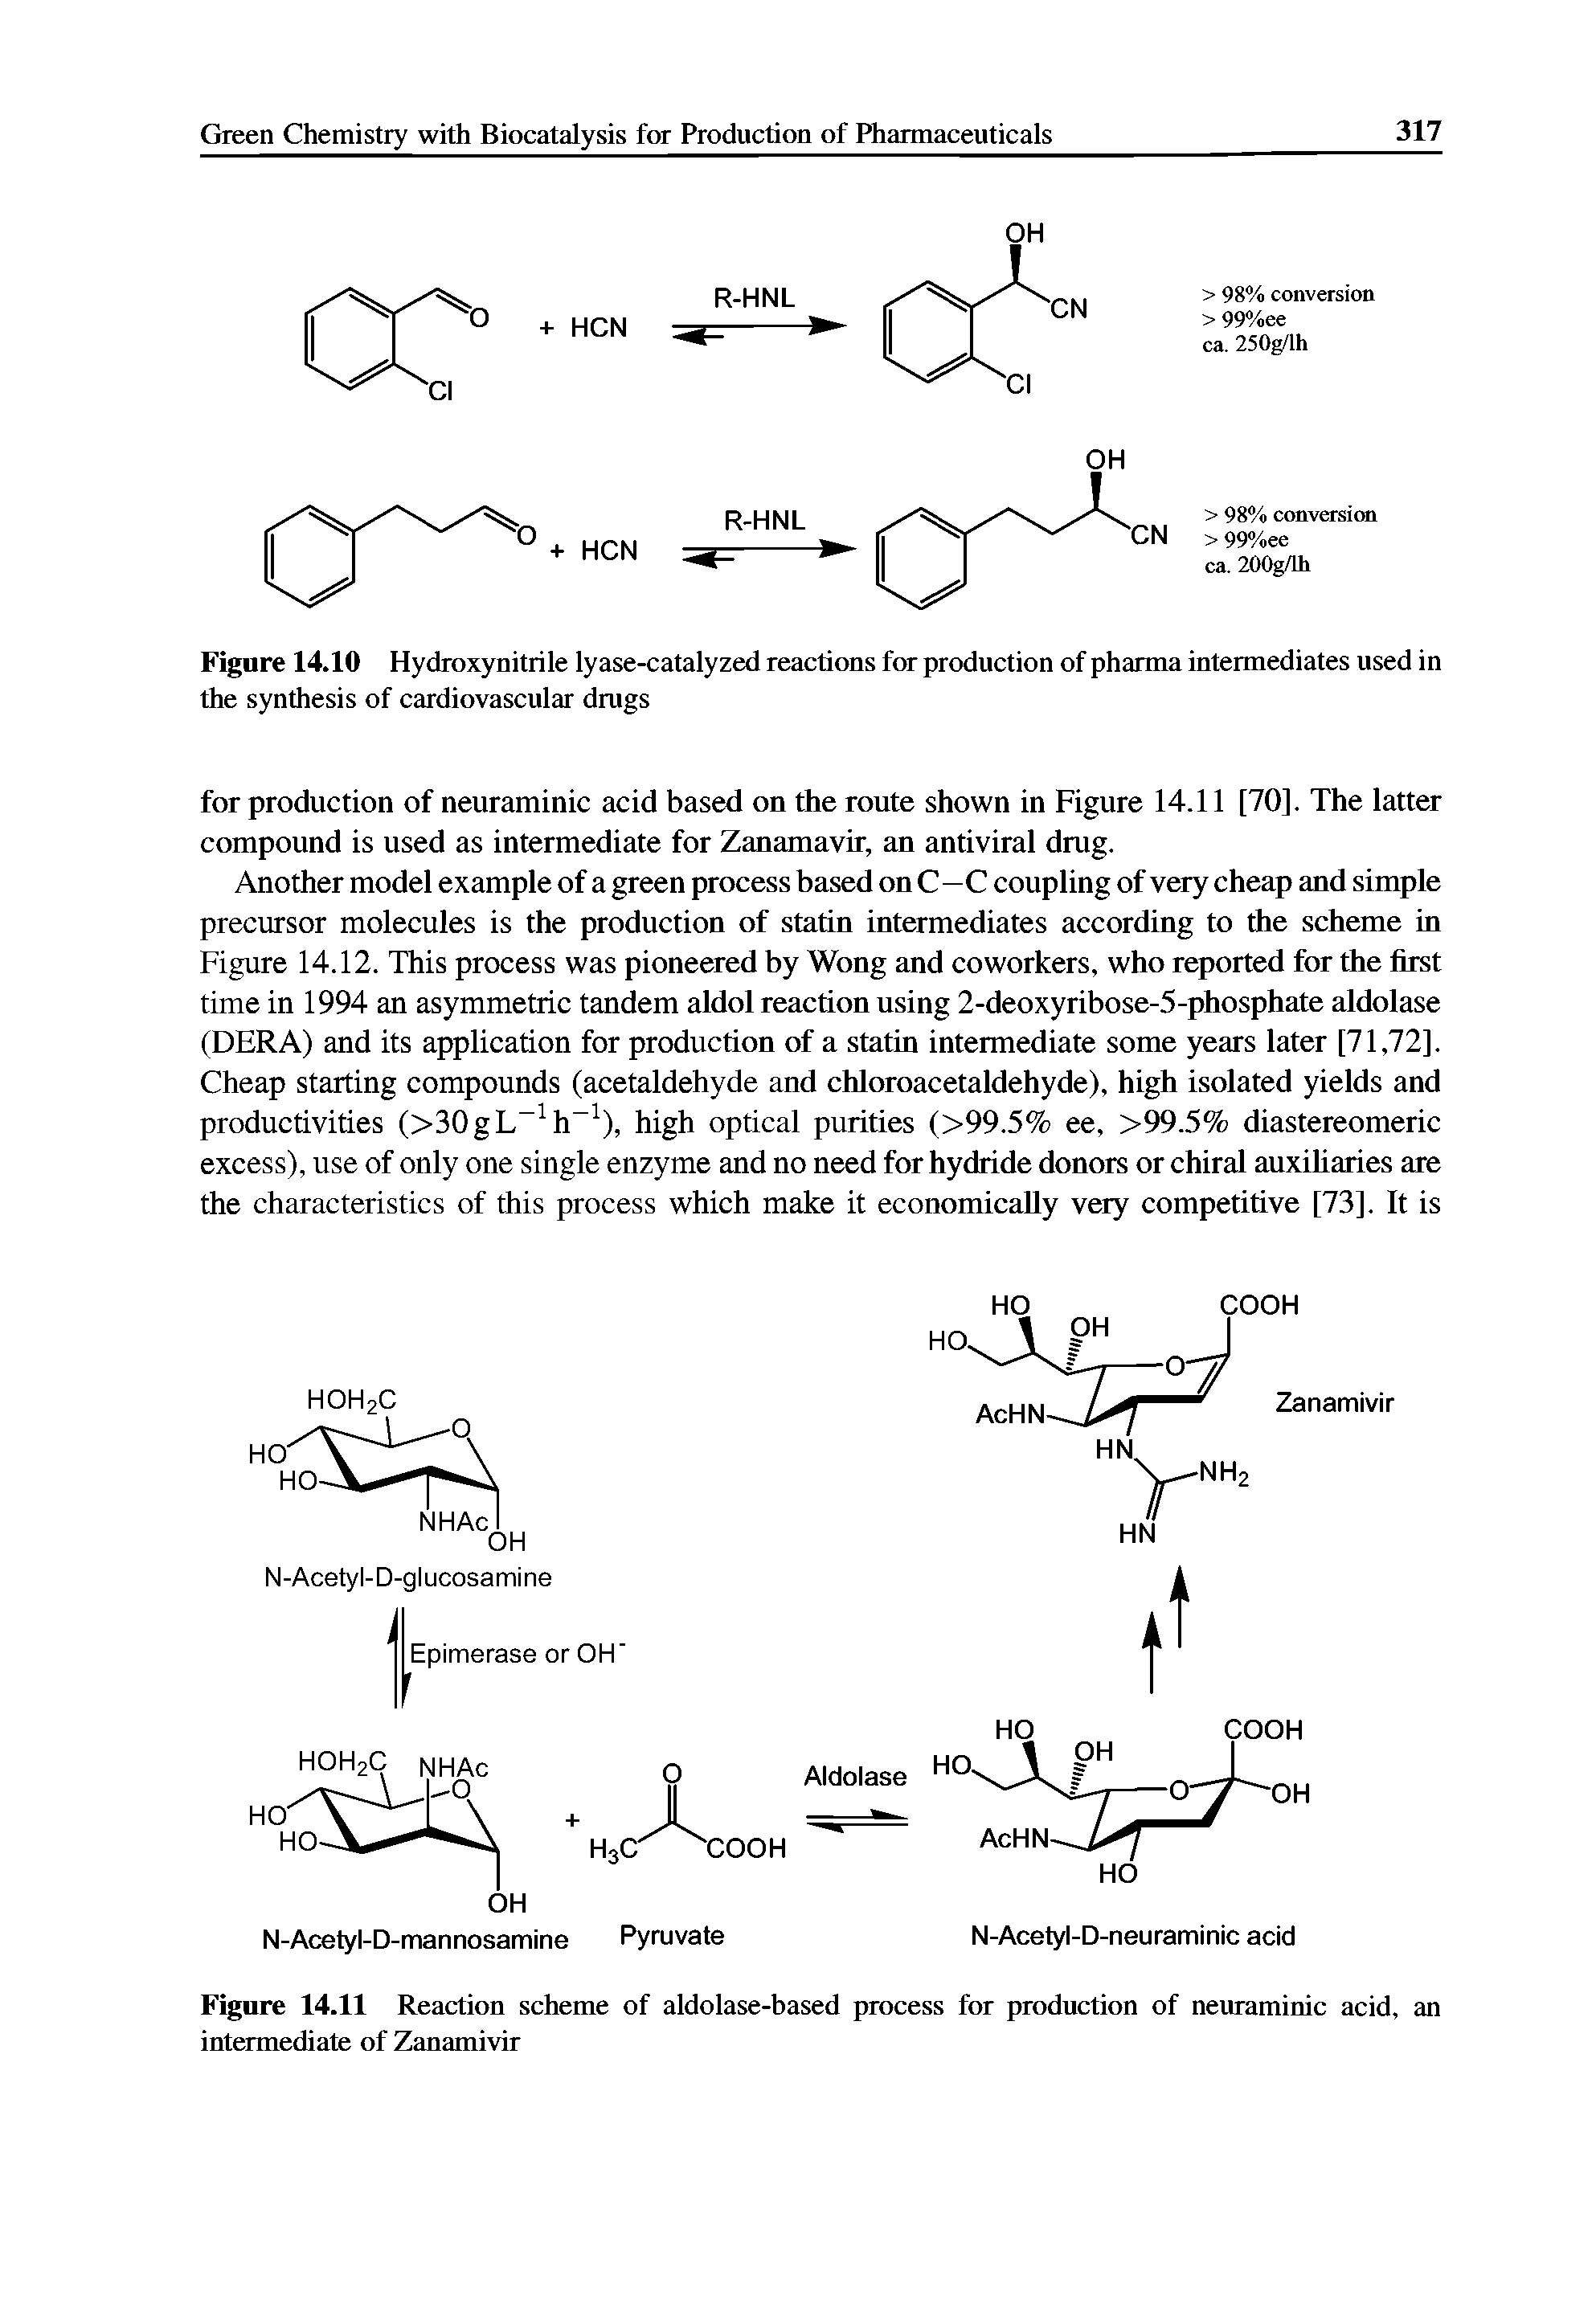 Figure 14.11 Reaction scheme of aldolase-based process for production of neuraminic acid, an intermediate of Zanamivir...